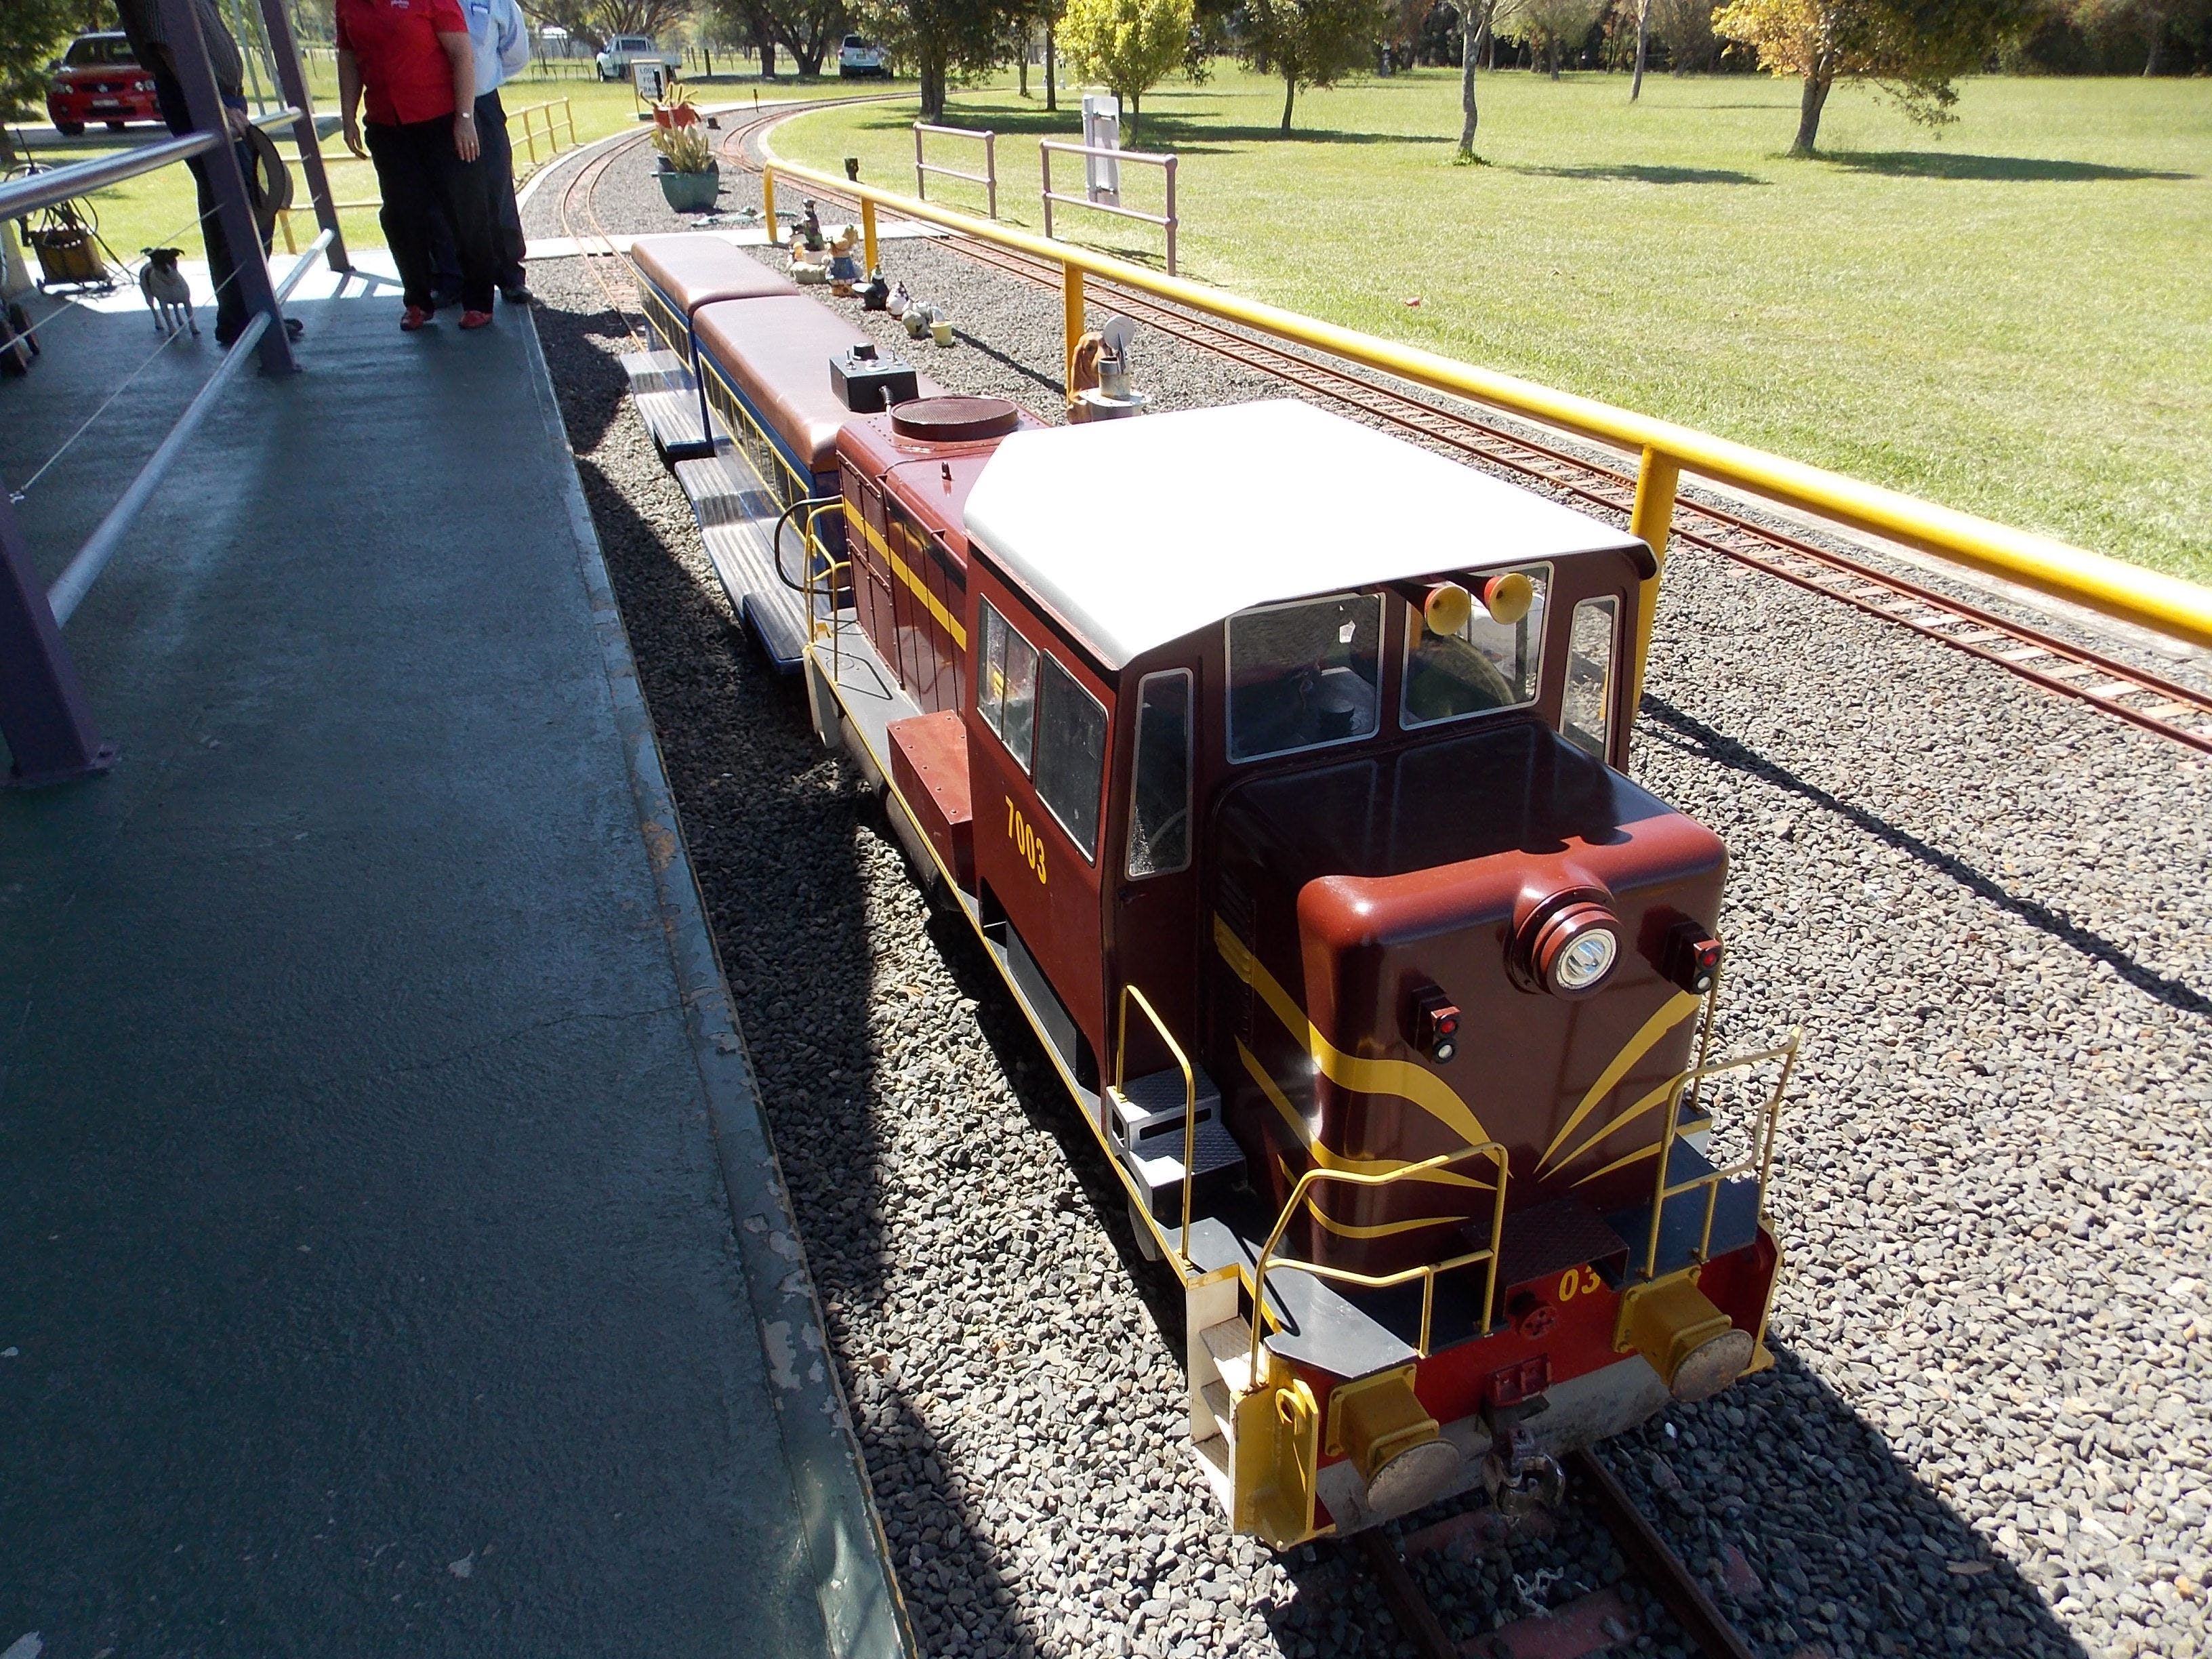 Penwood Miniature Railway - Tourism Adelaide